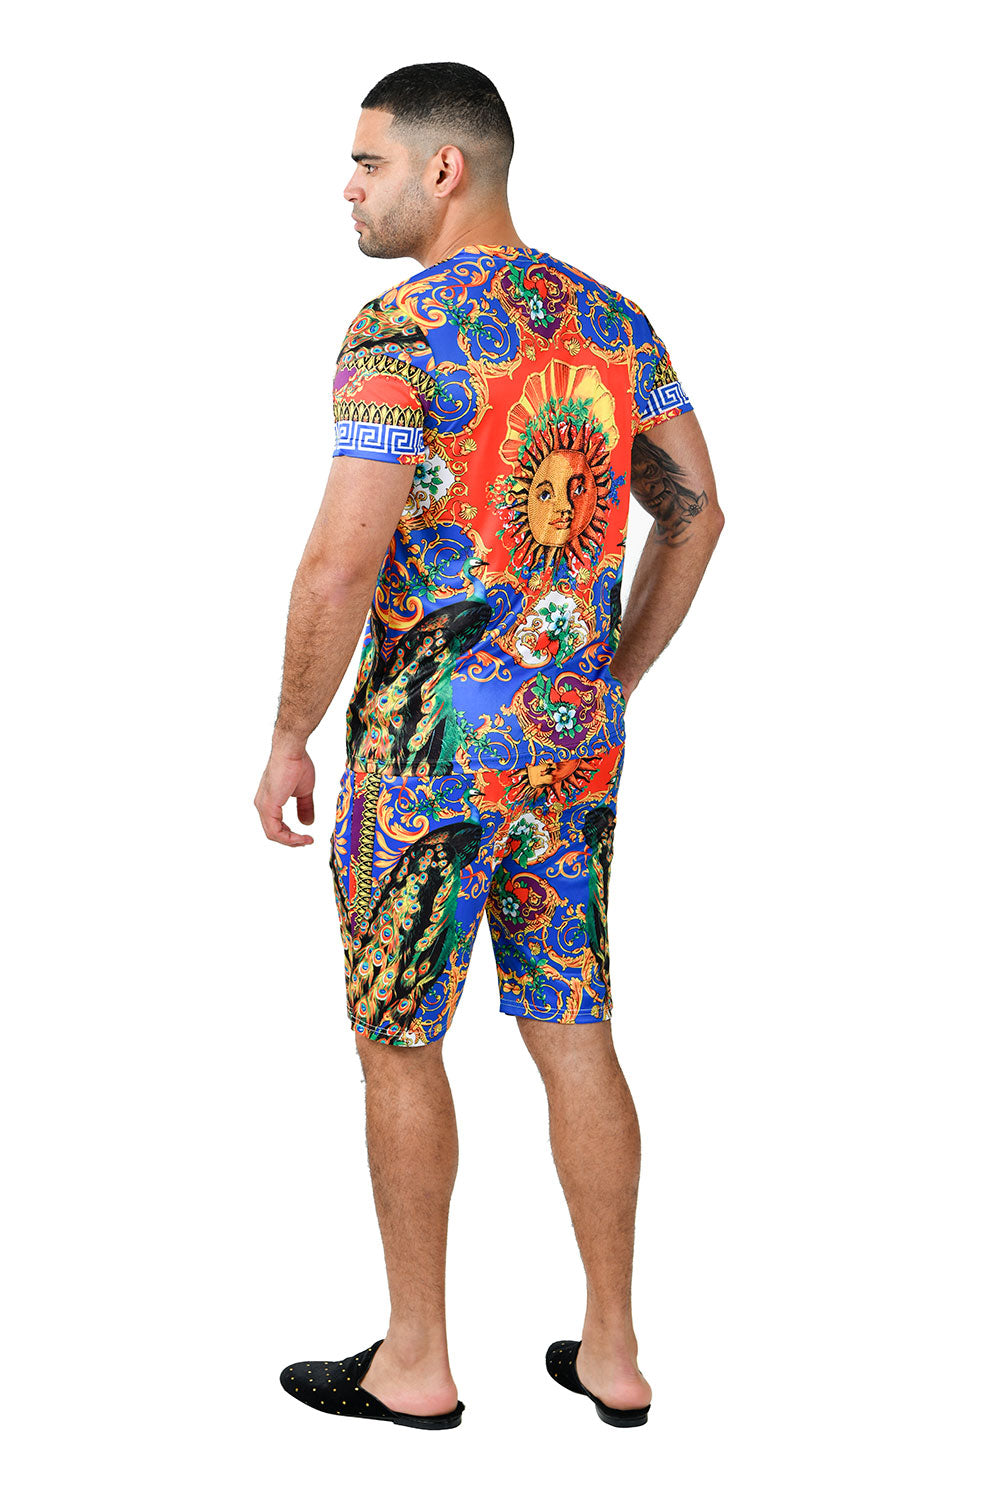 Barabas Men's Printed Sun Floral Multicolor Crew Neck T-Shirt STP3000 Royal